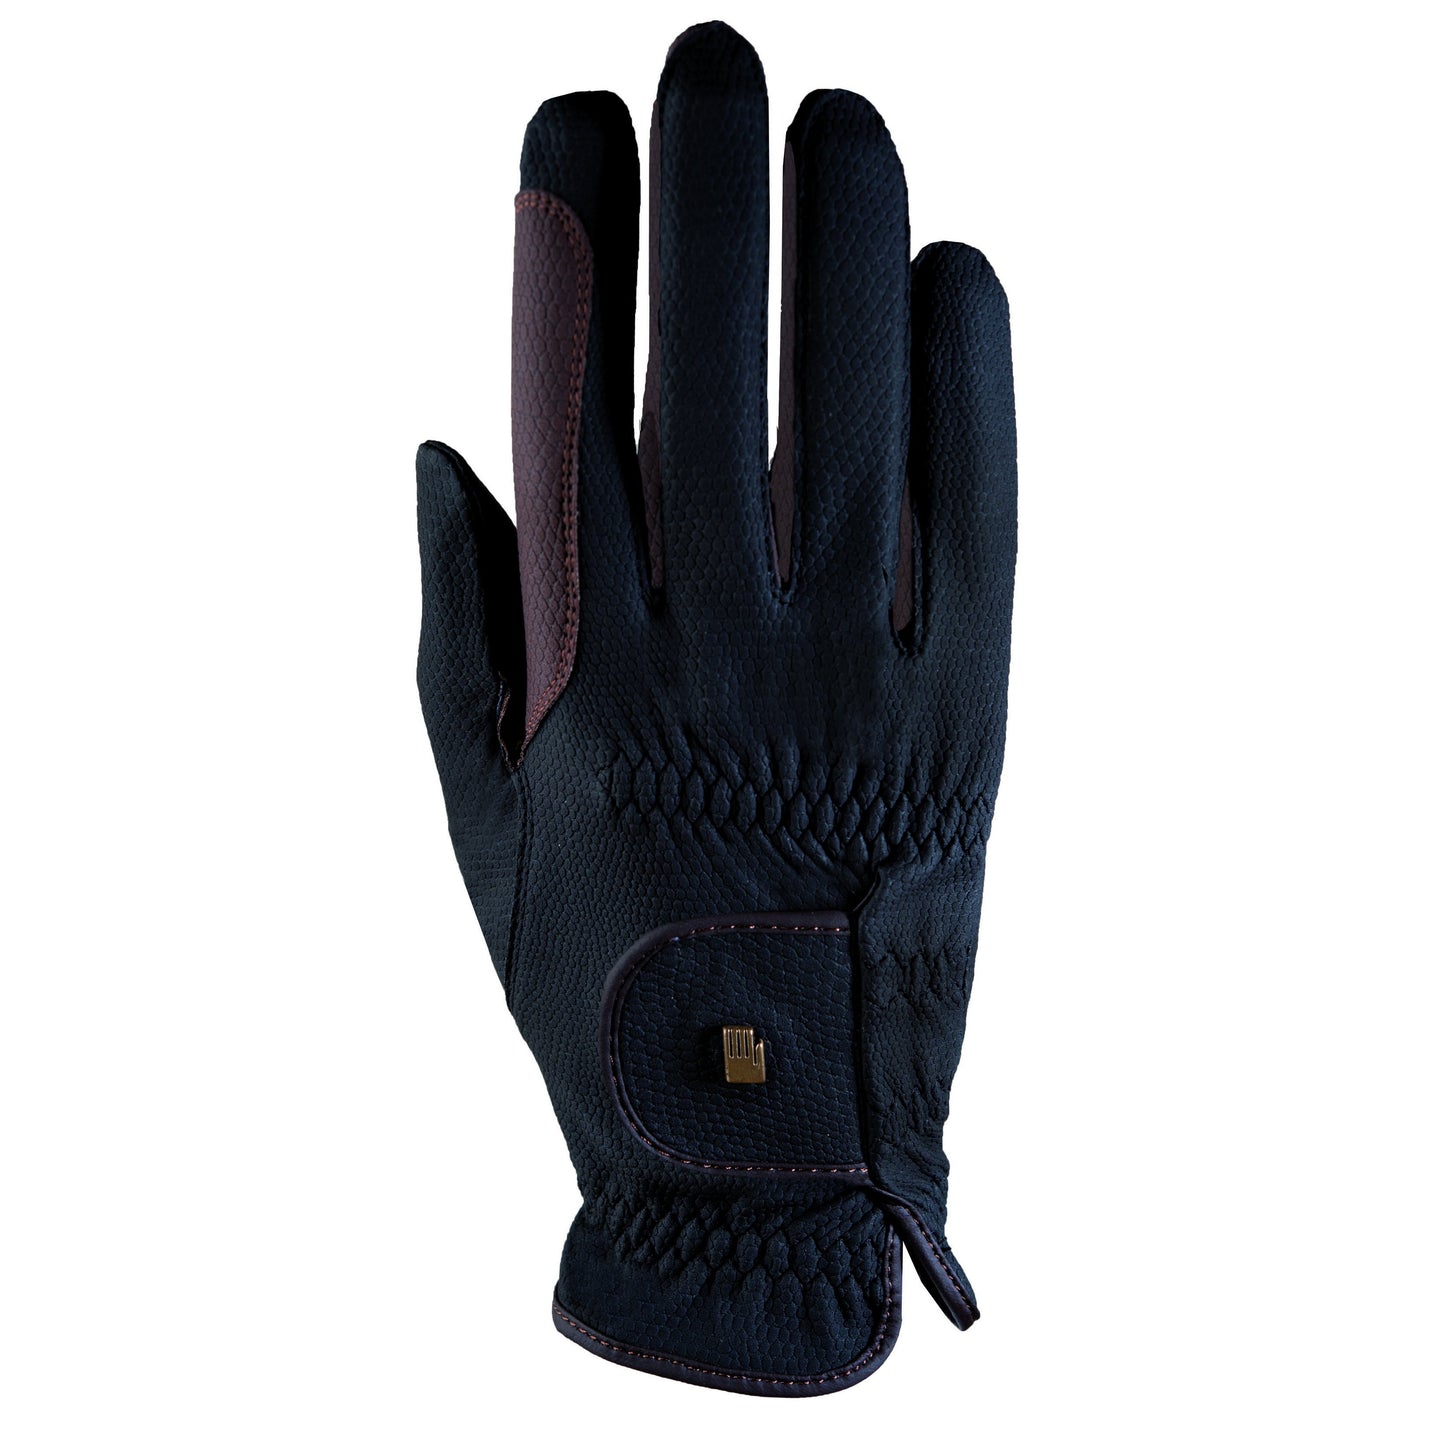 Shop Roeckl Malta Glove - Premium Quality Equestrian Gloves for Optimal Performance-Trailrace Equestrian Outfitters-The Equestrian